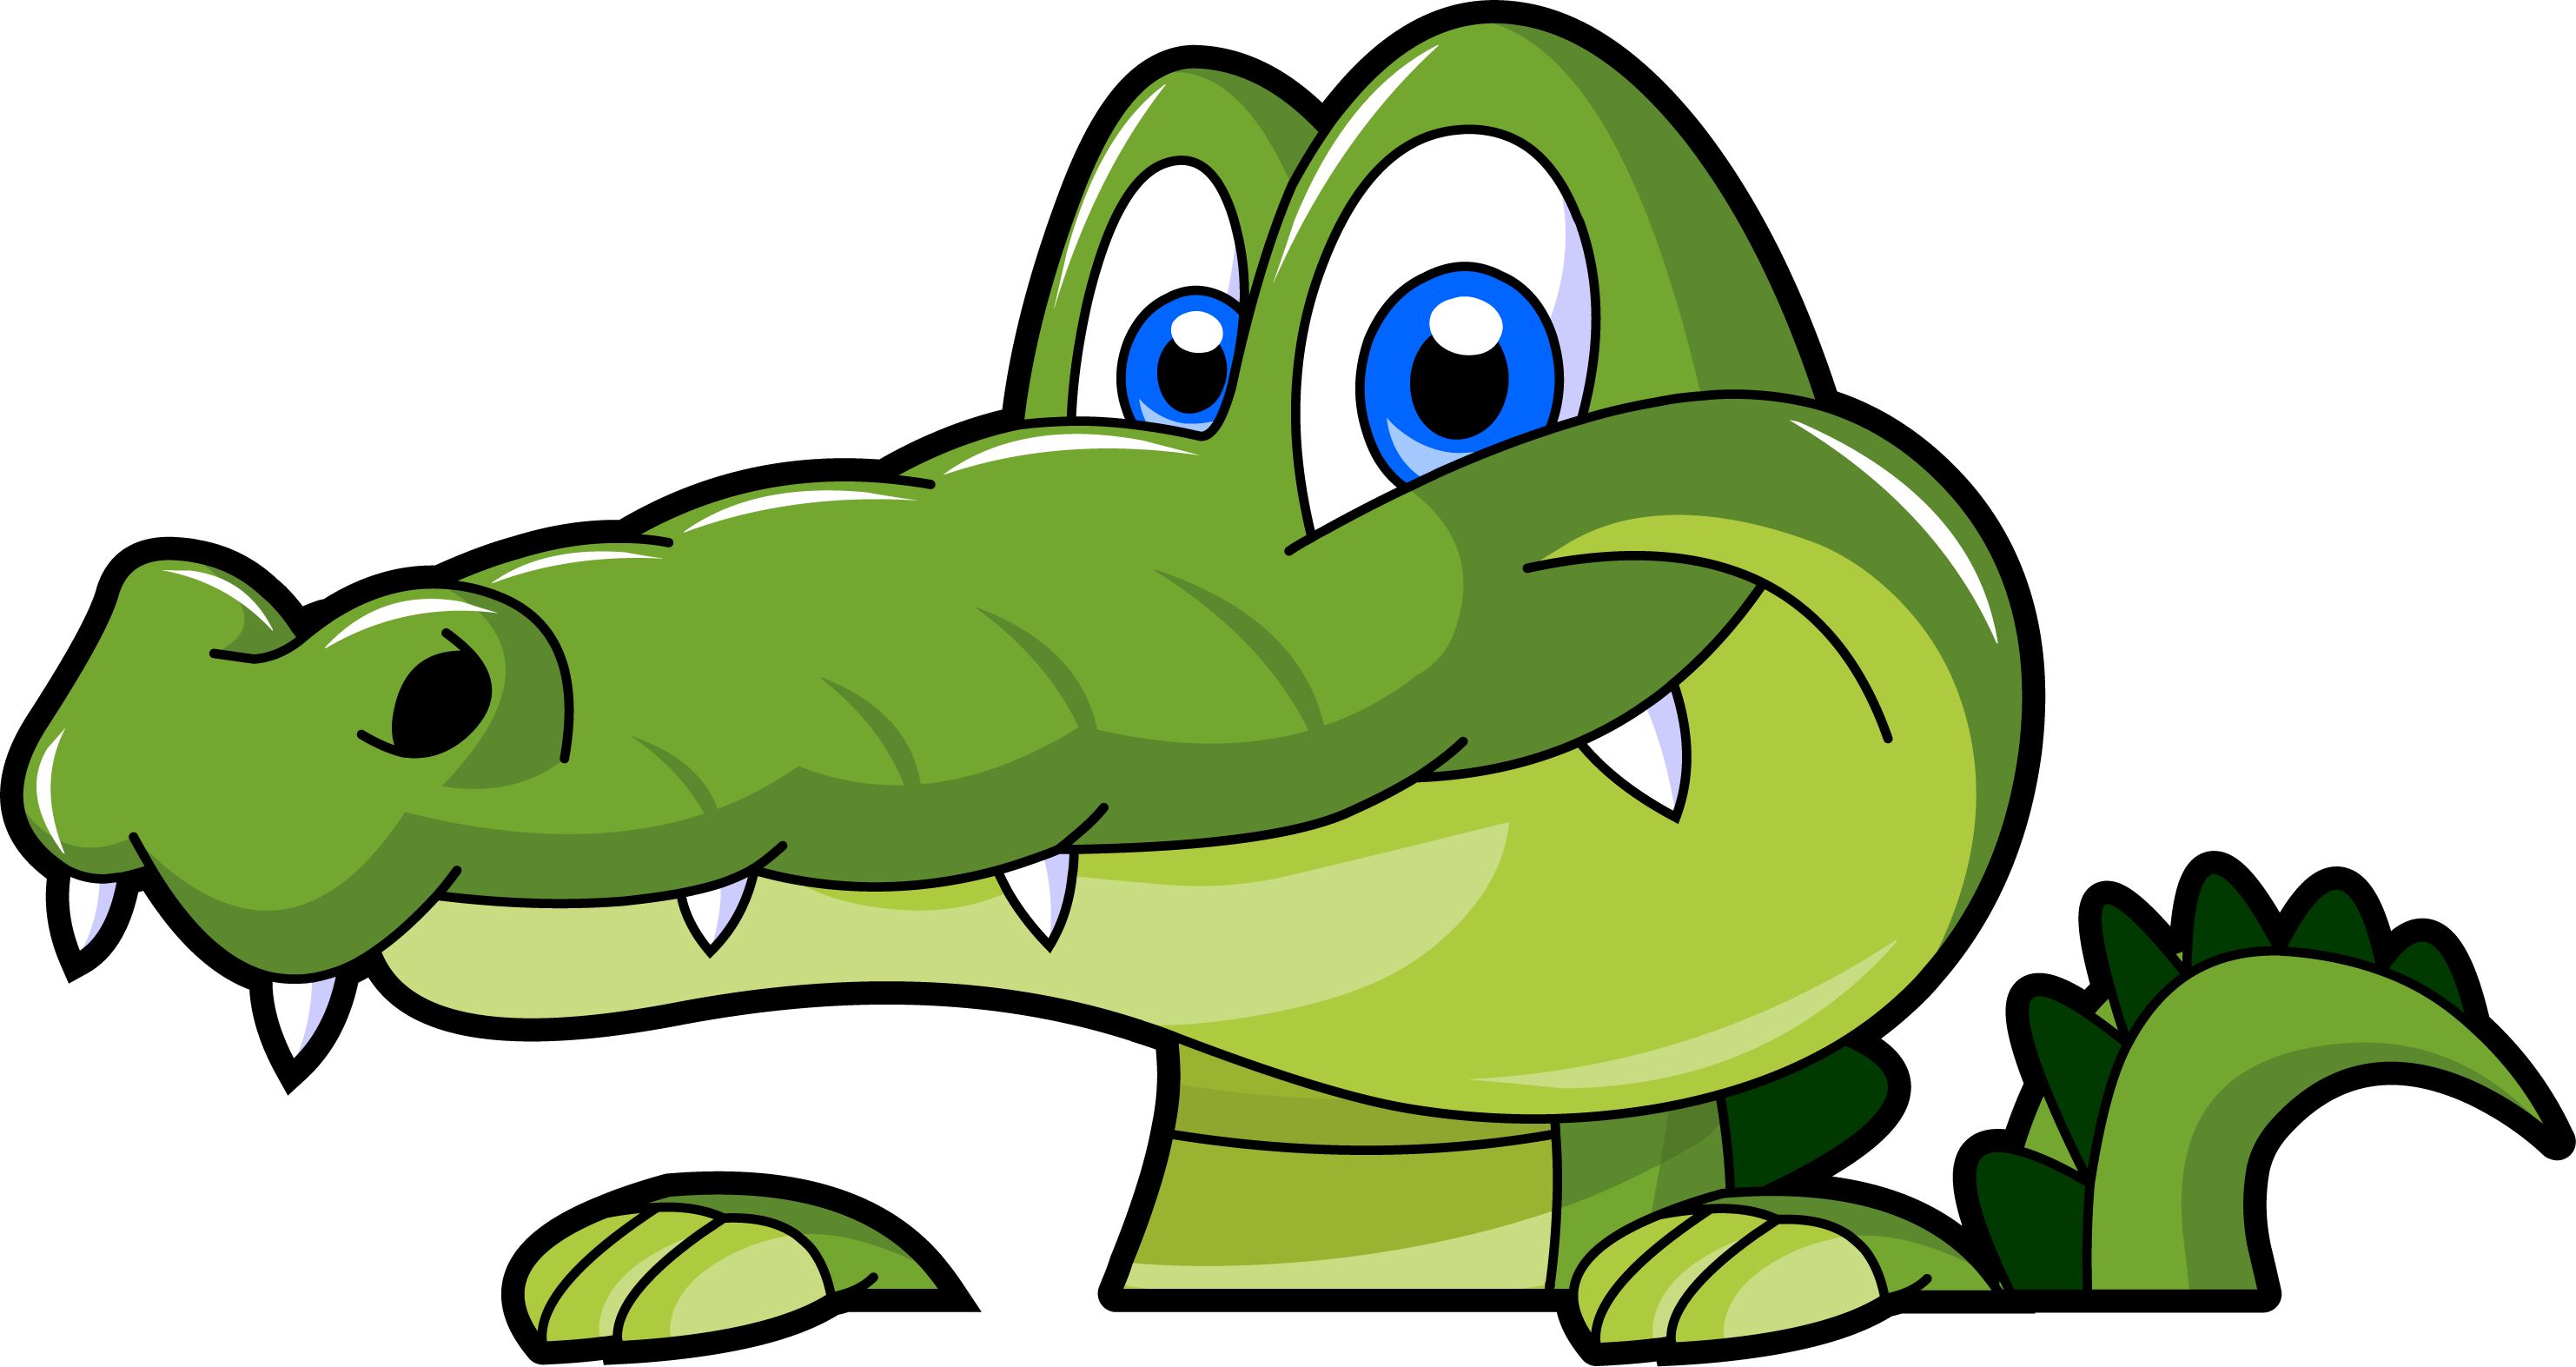 Swamp alligator cartoon clipart image